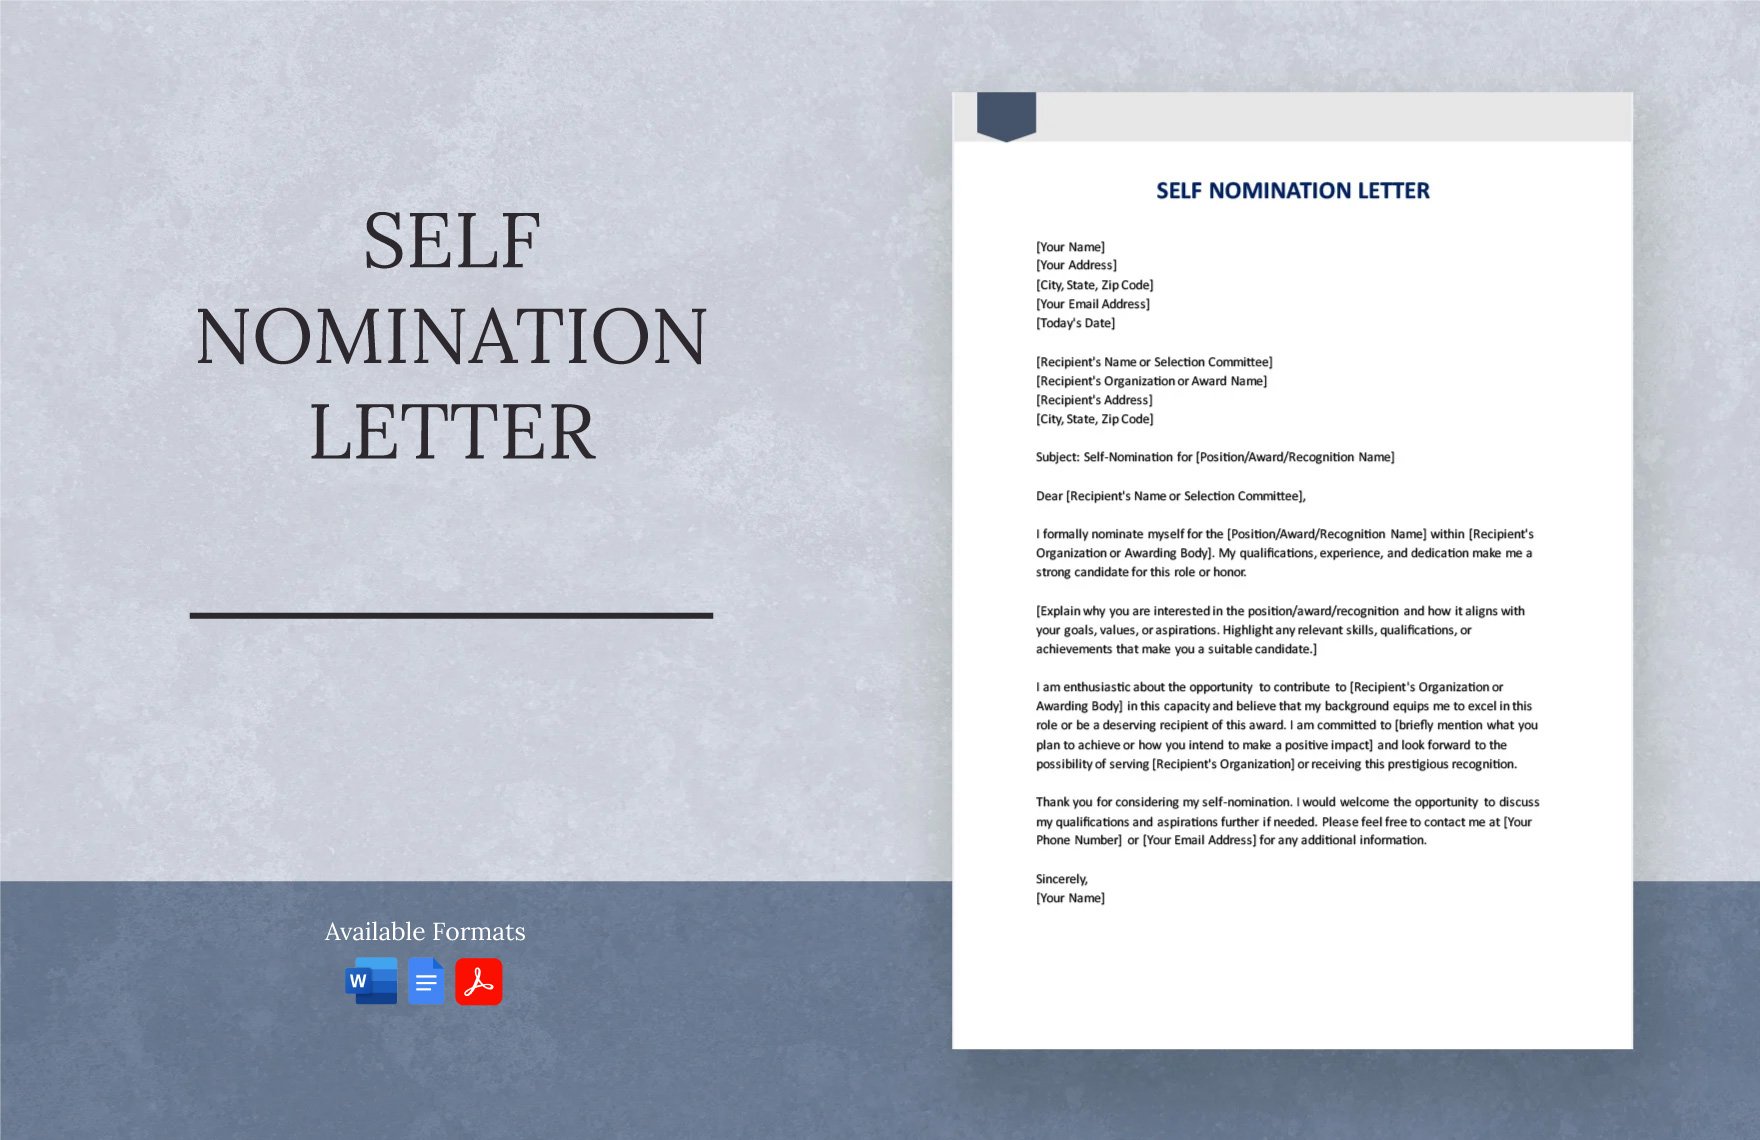 Self Nomination Letter in Word, Google Docs, PDF